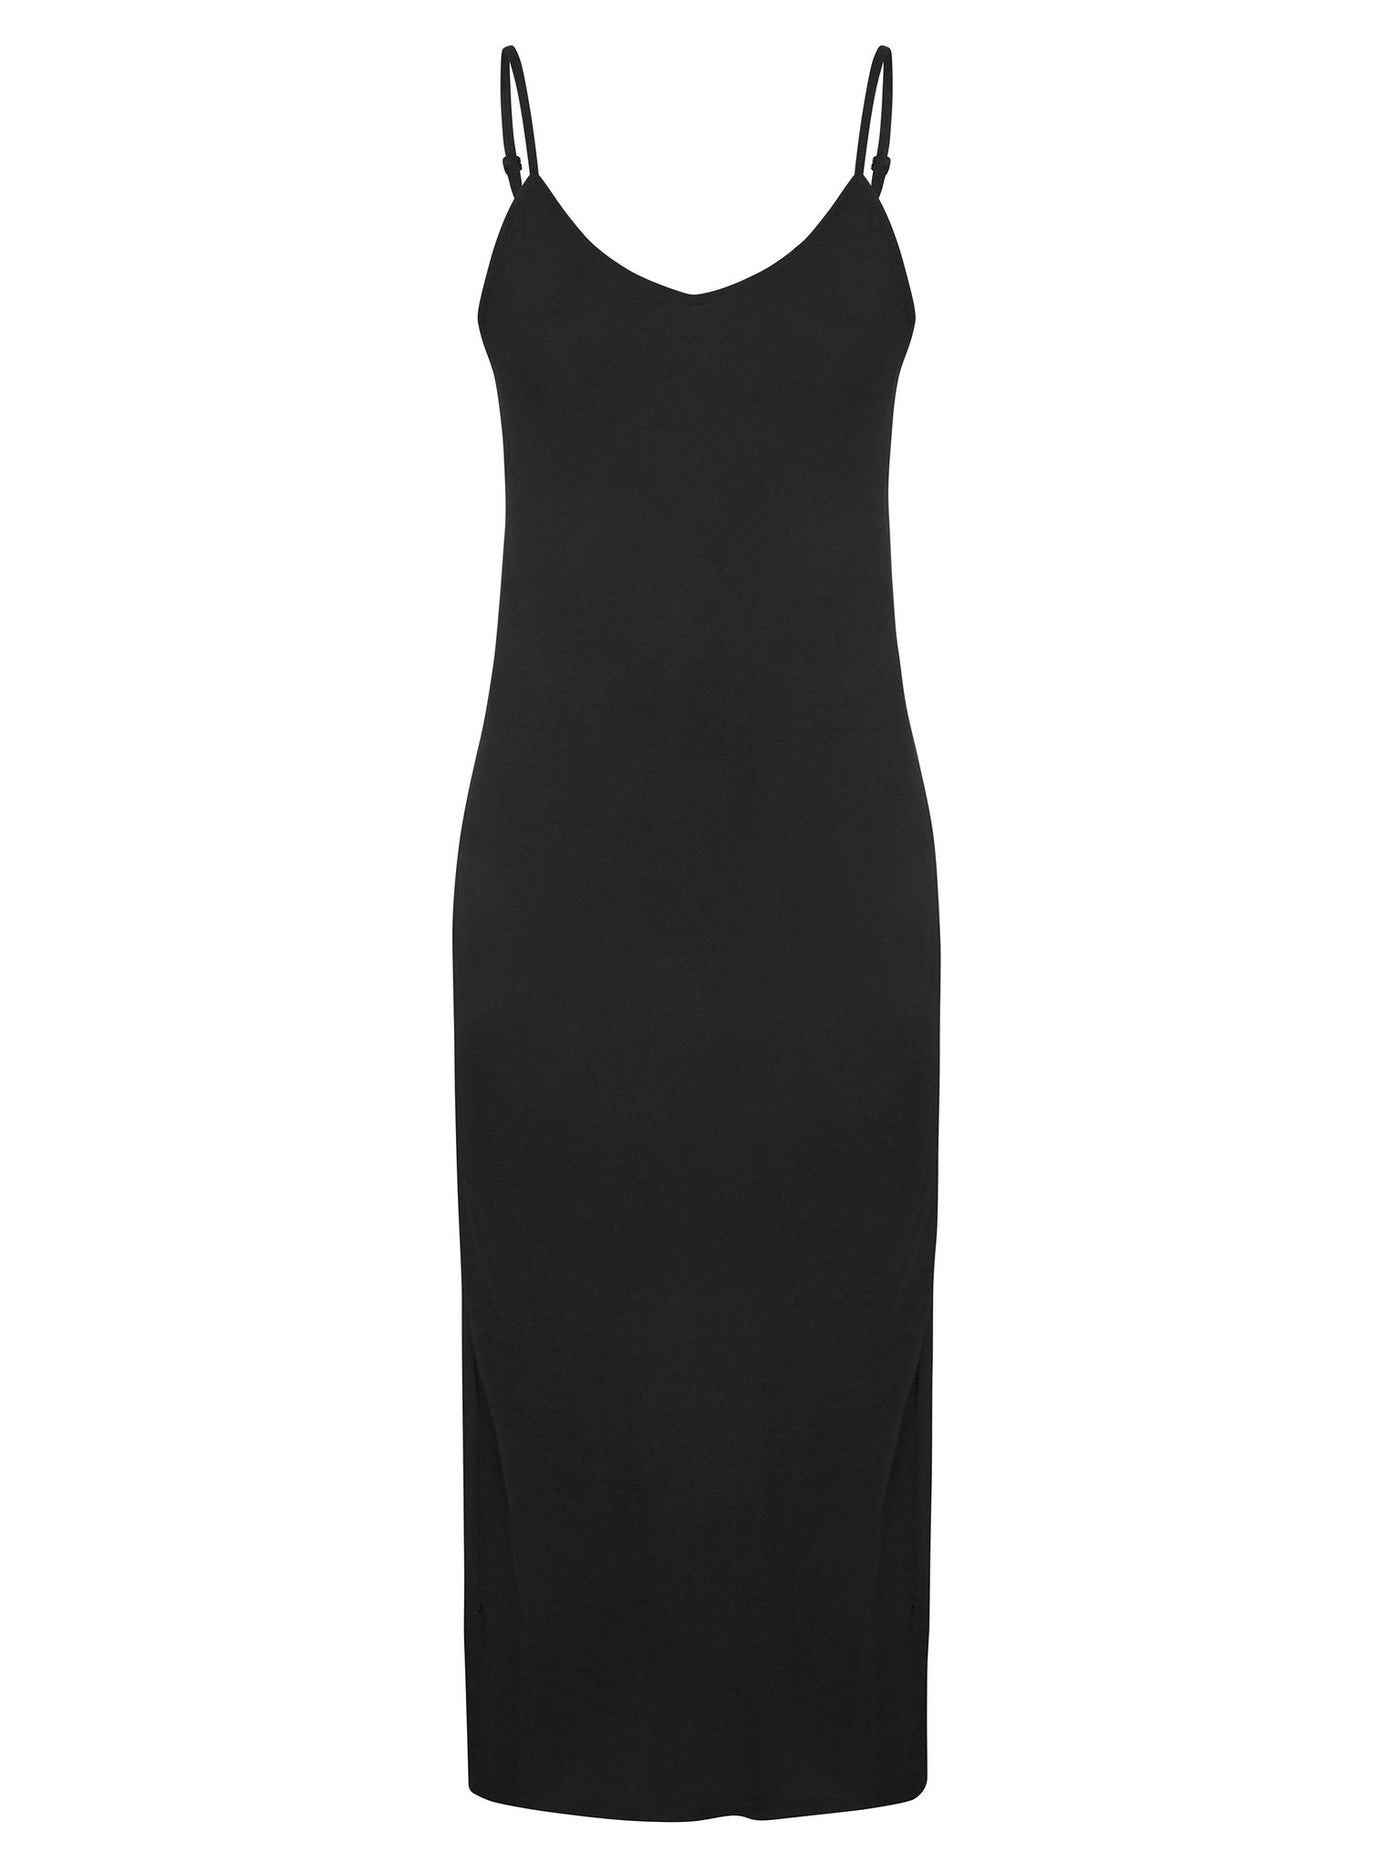 Black Bias Cut slip dress, Midi Length, Adjustable Straps, Side Splits (5cm), 100% rayon, designed in Australia